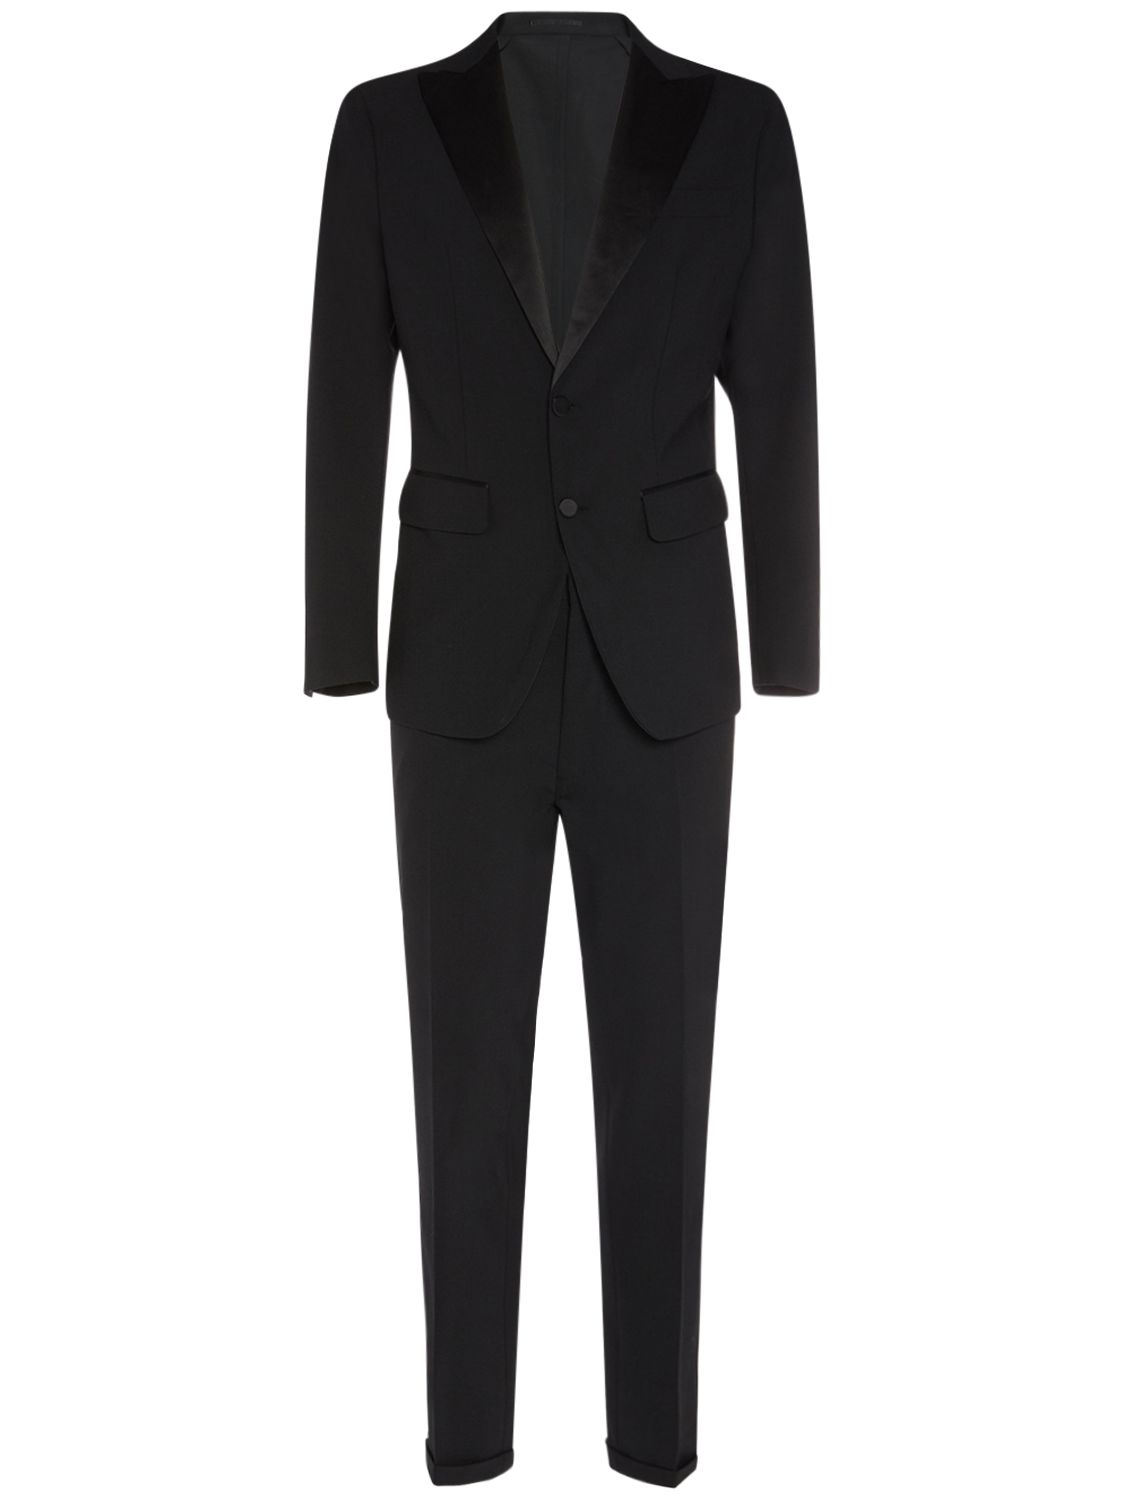 Miami Tuxedo Single Breasted Suit